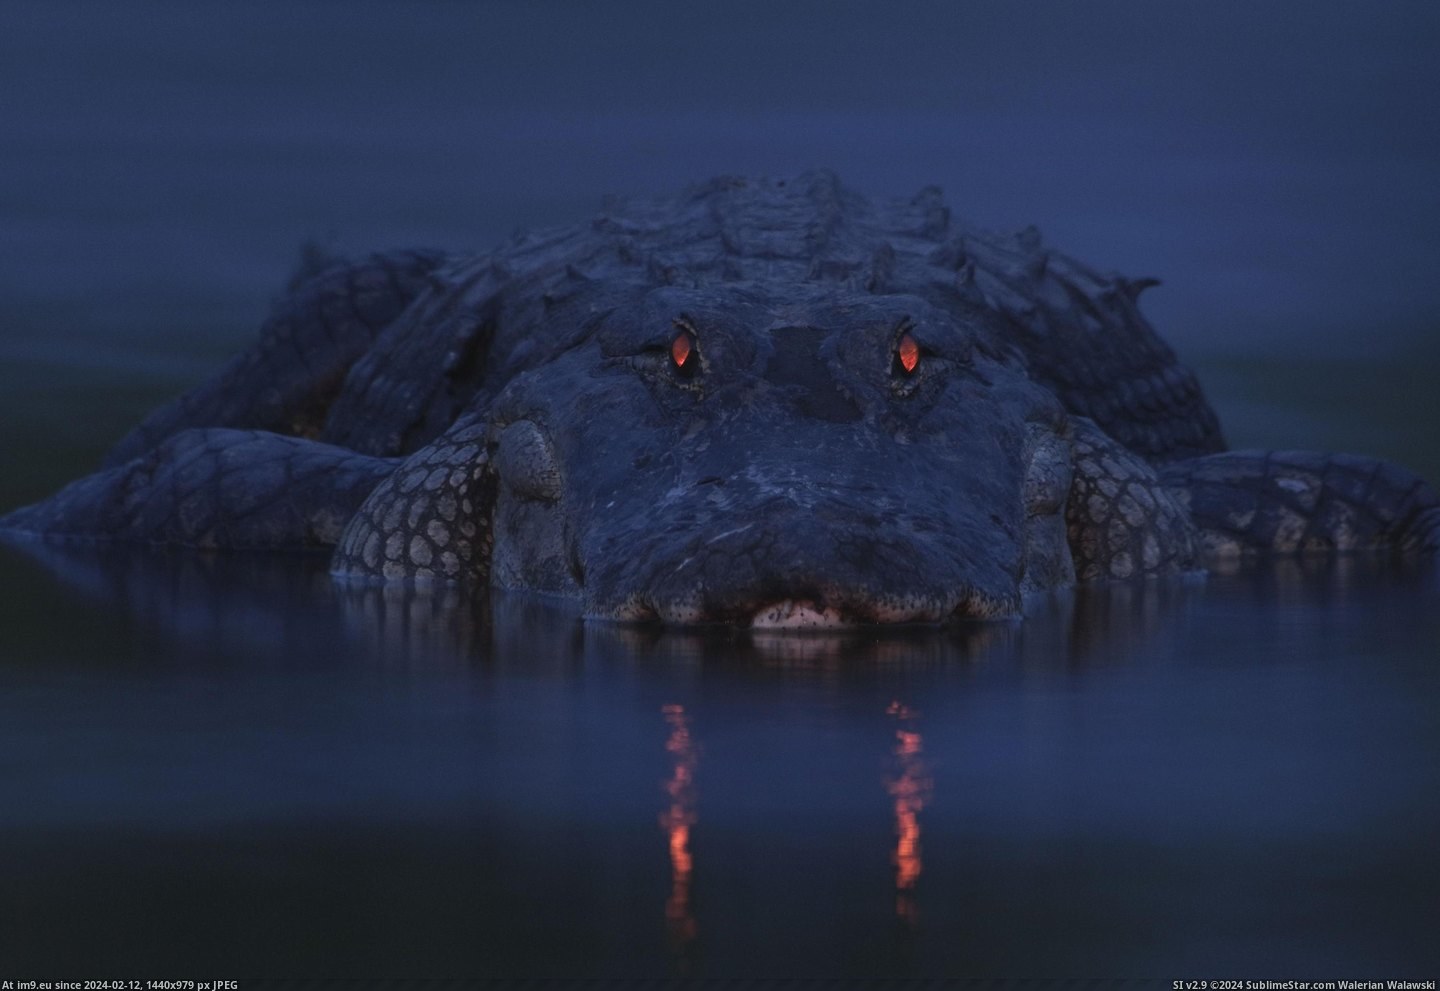 #Eyes #Alligator #Glowing #Dusk [Pics] Glowing eyes of an alligator at dusk Pic. (Bild von album My r/PICS favs))